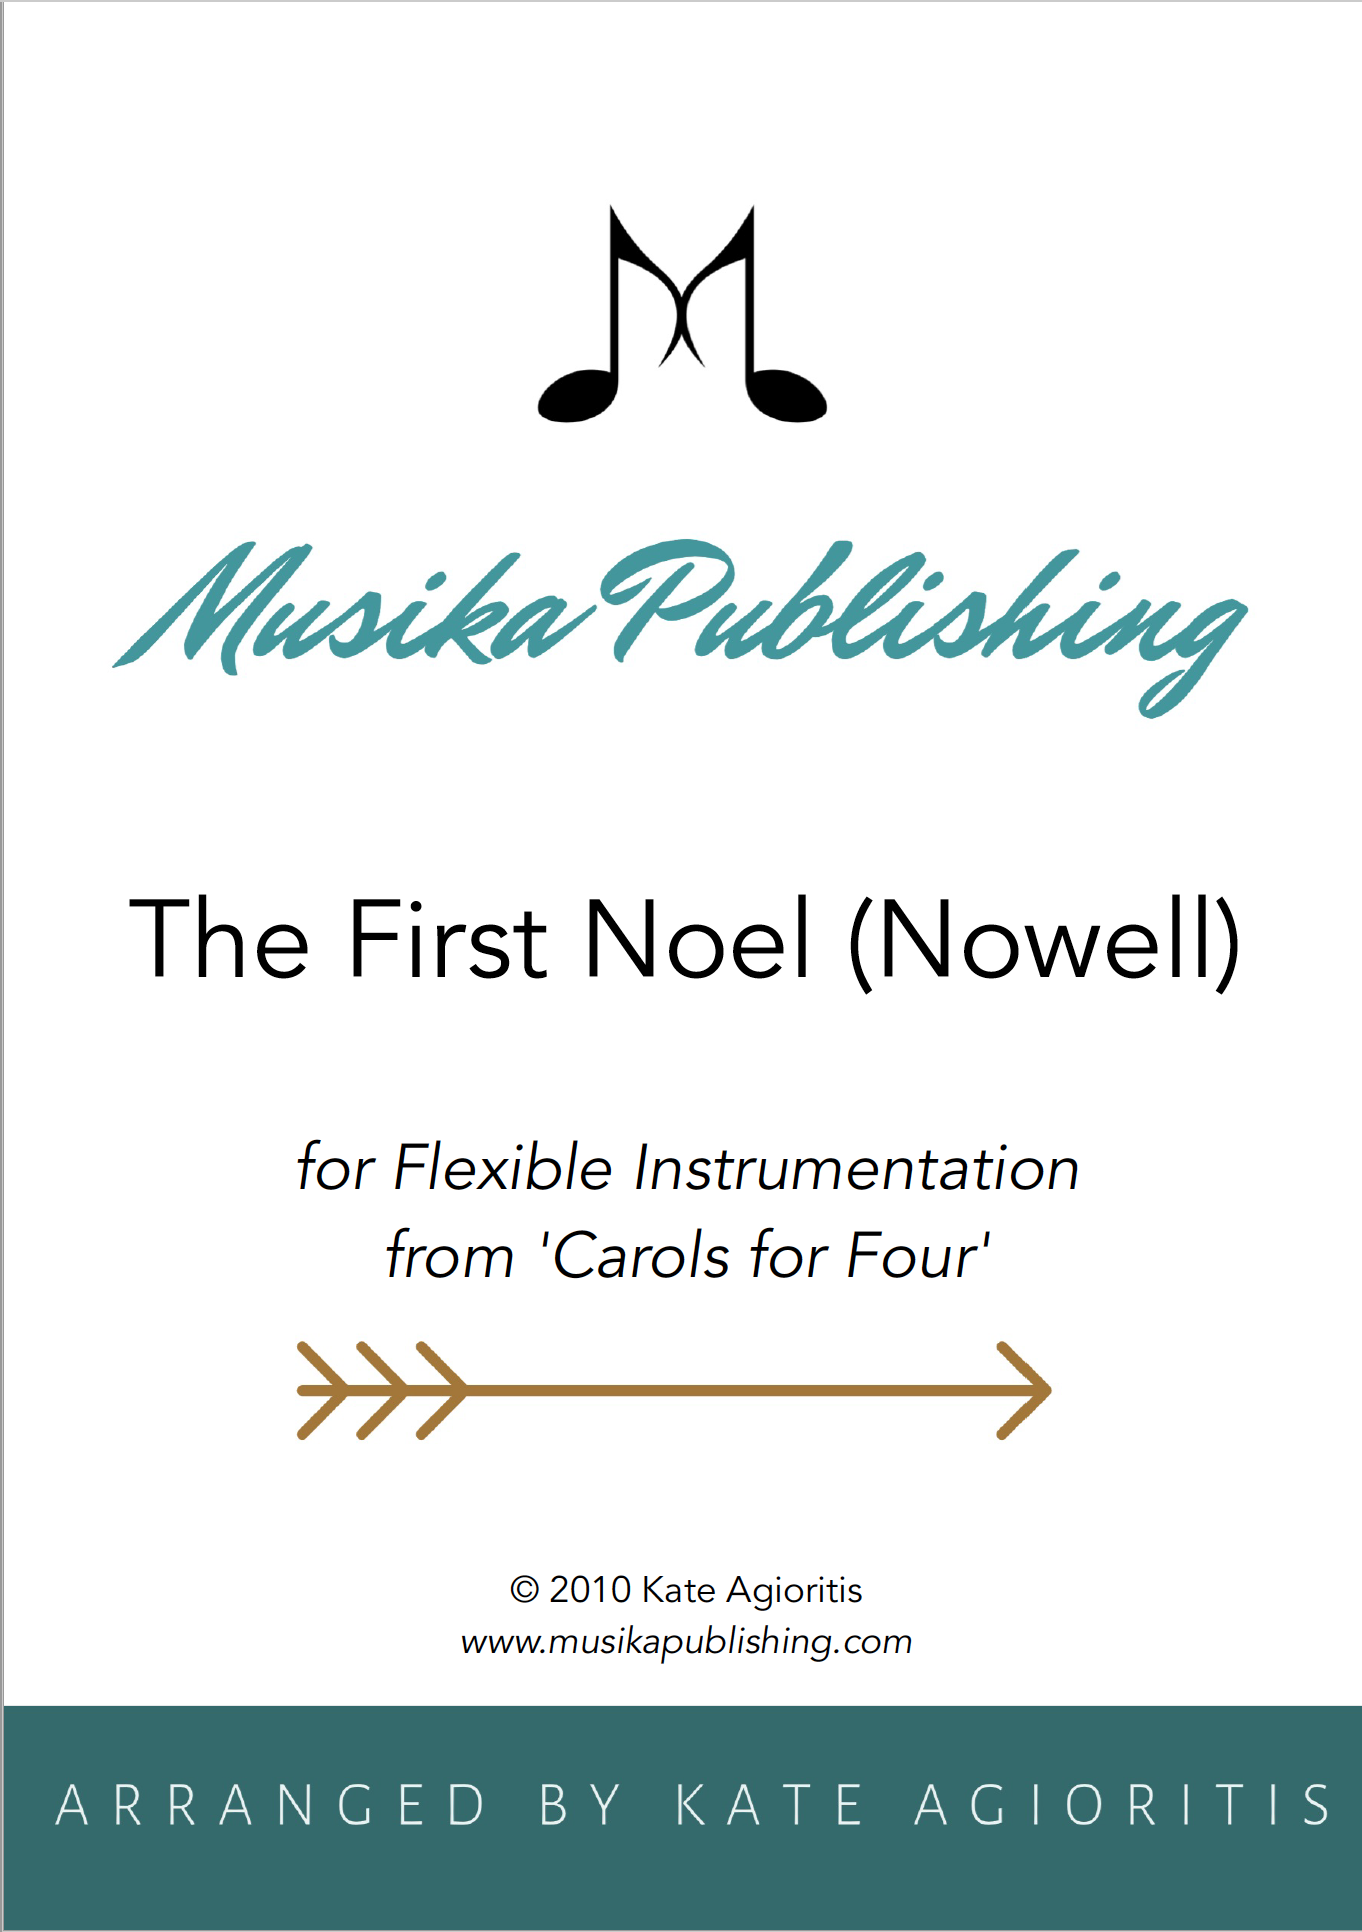 The First Noel (Nowell) - Flexible Instrumentation